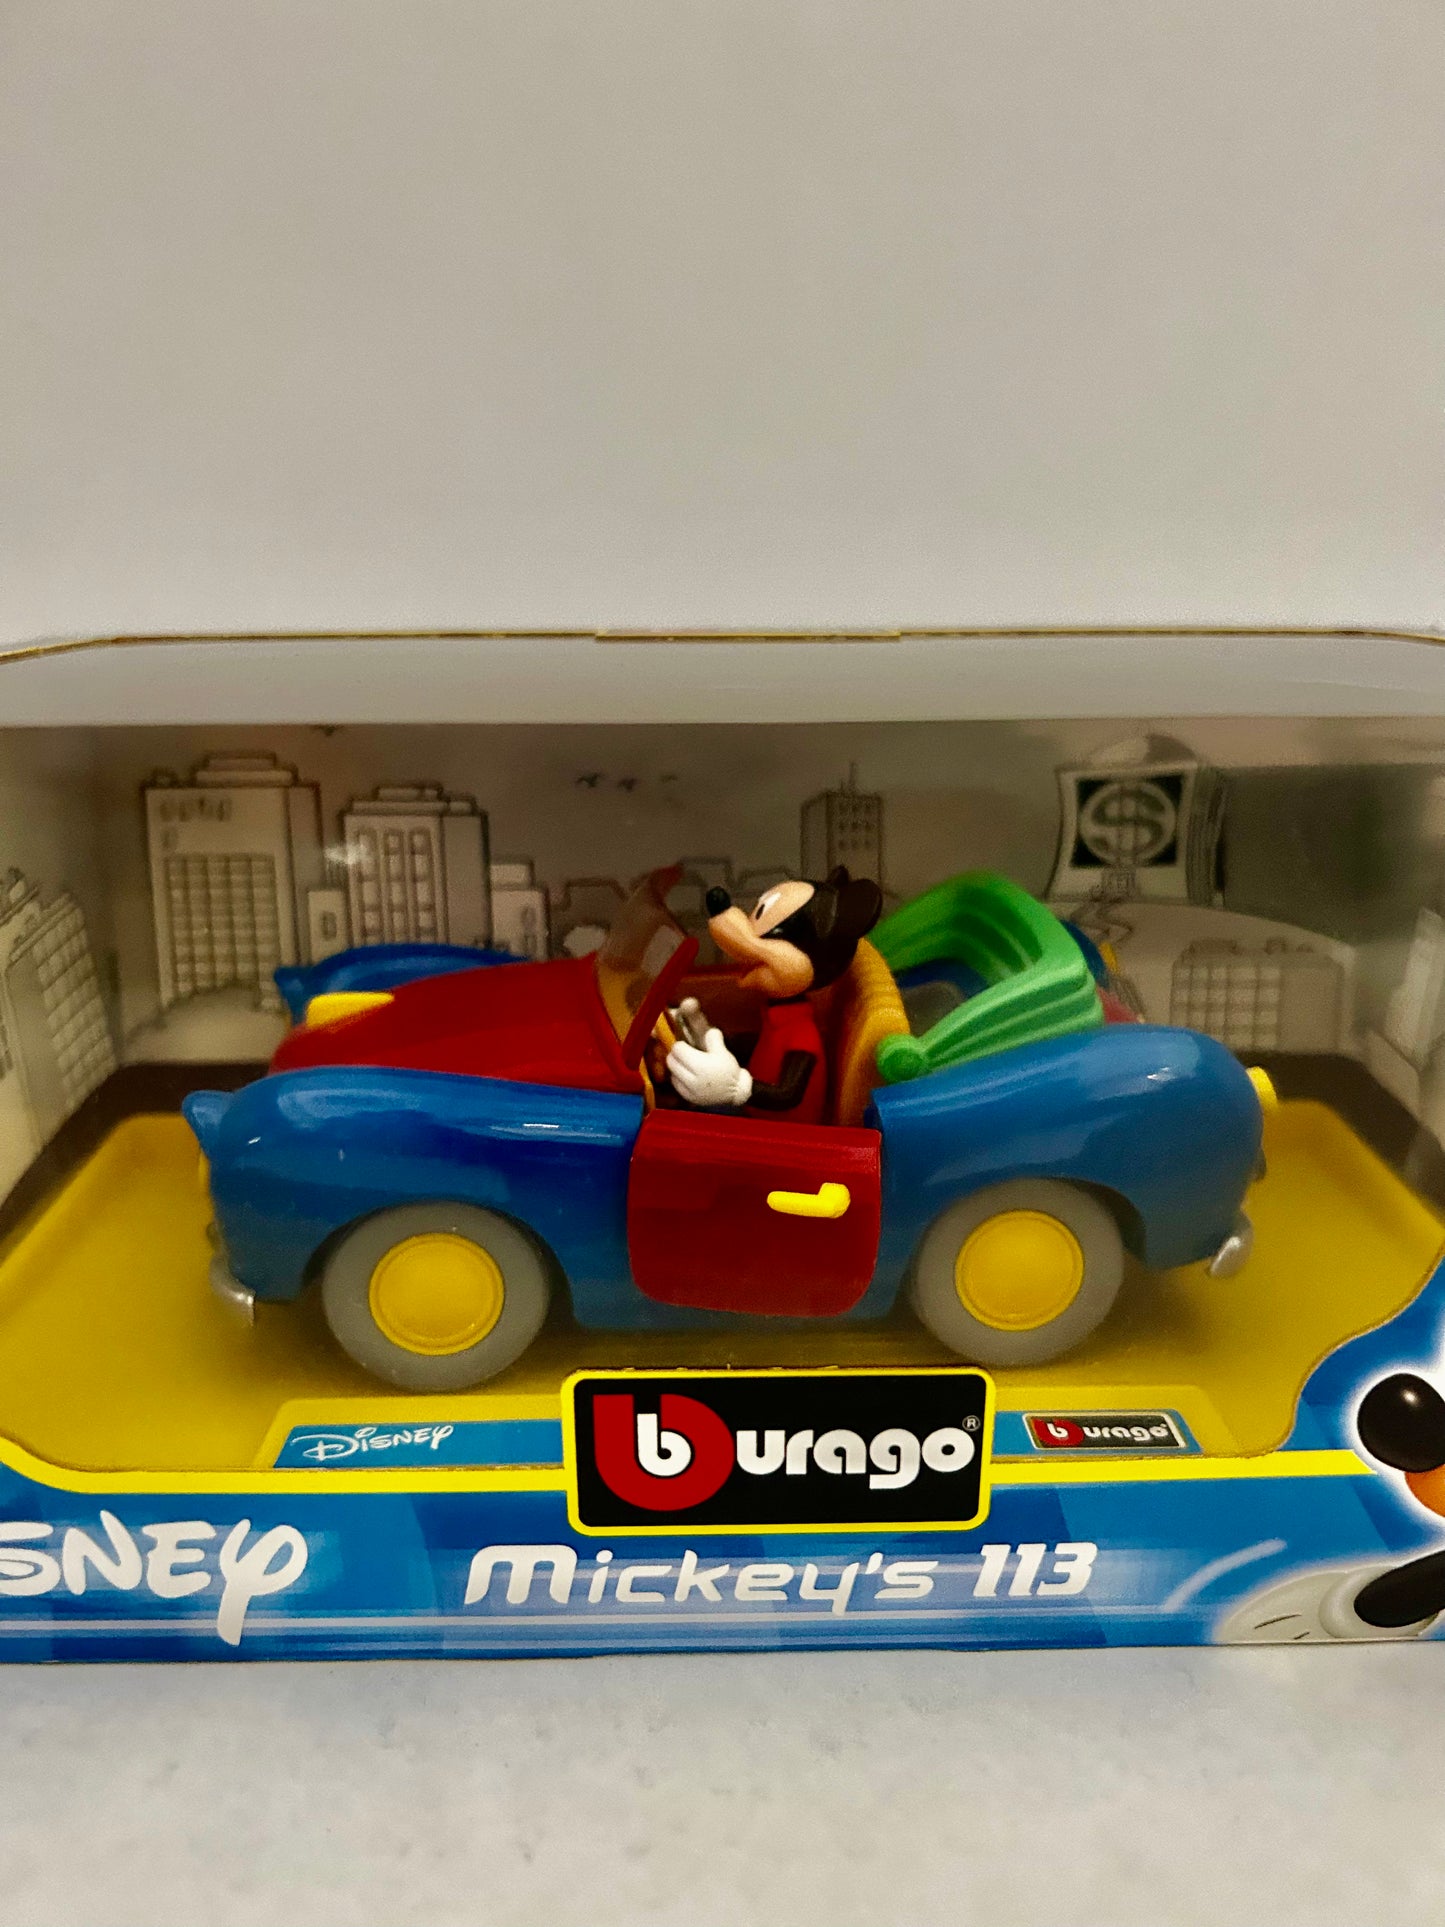 Metal Car Bburago Mickey Mouse 113 1:24